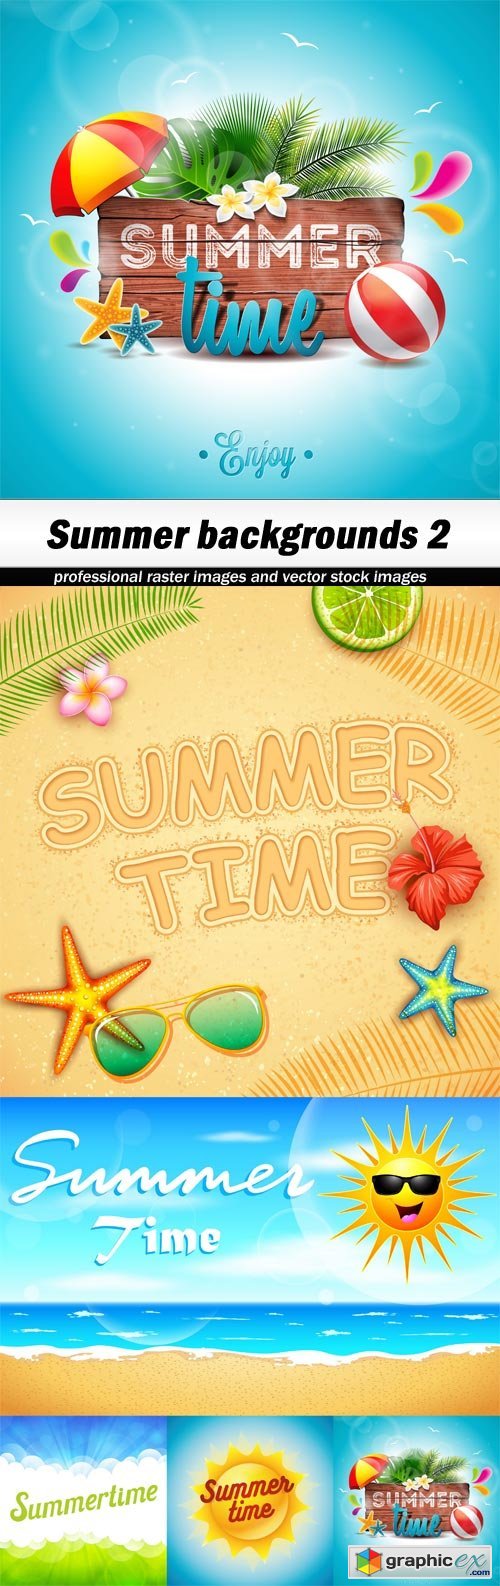 Summer backgrounds 2-5 EPS